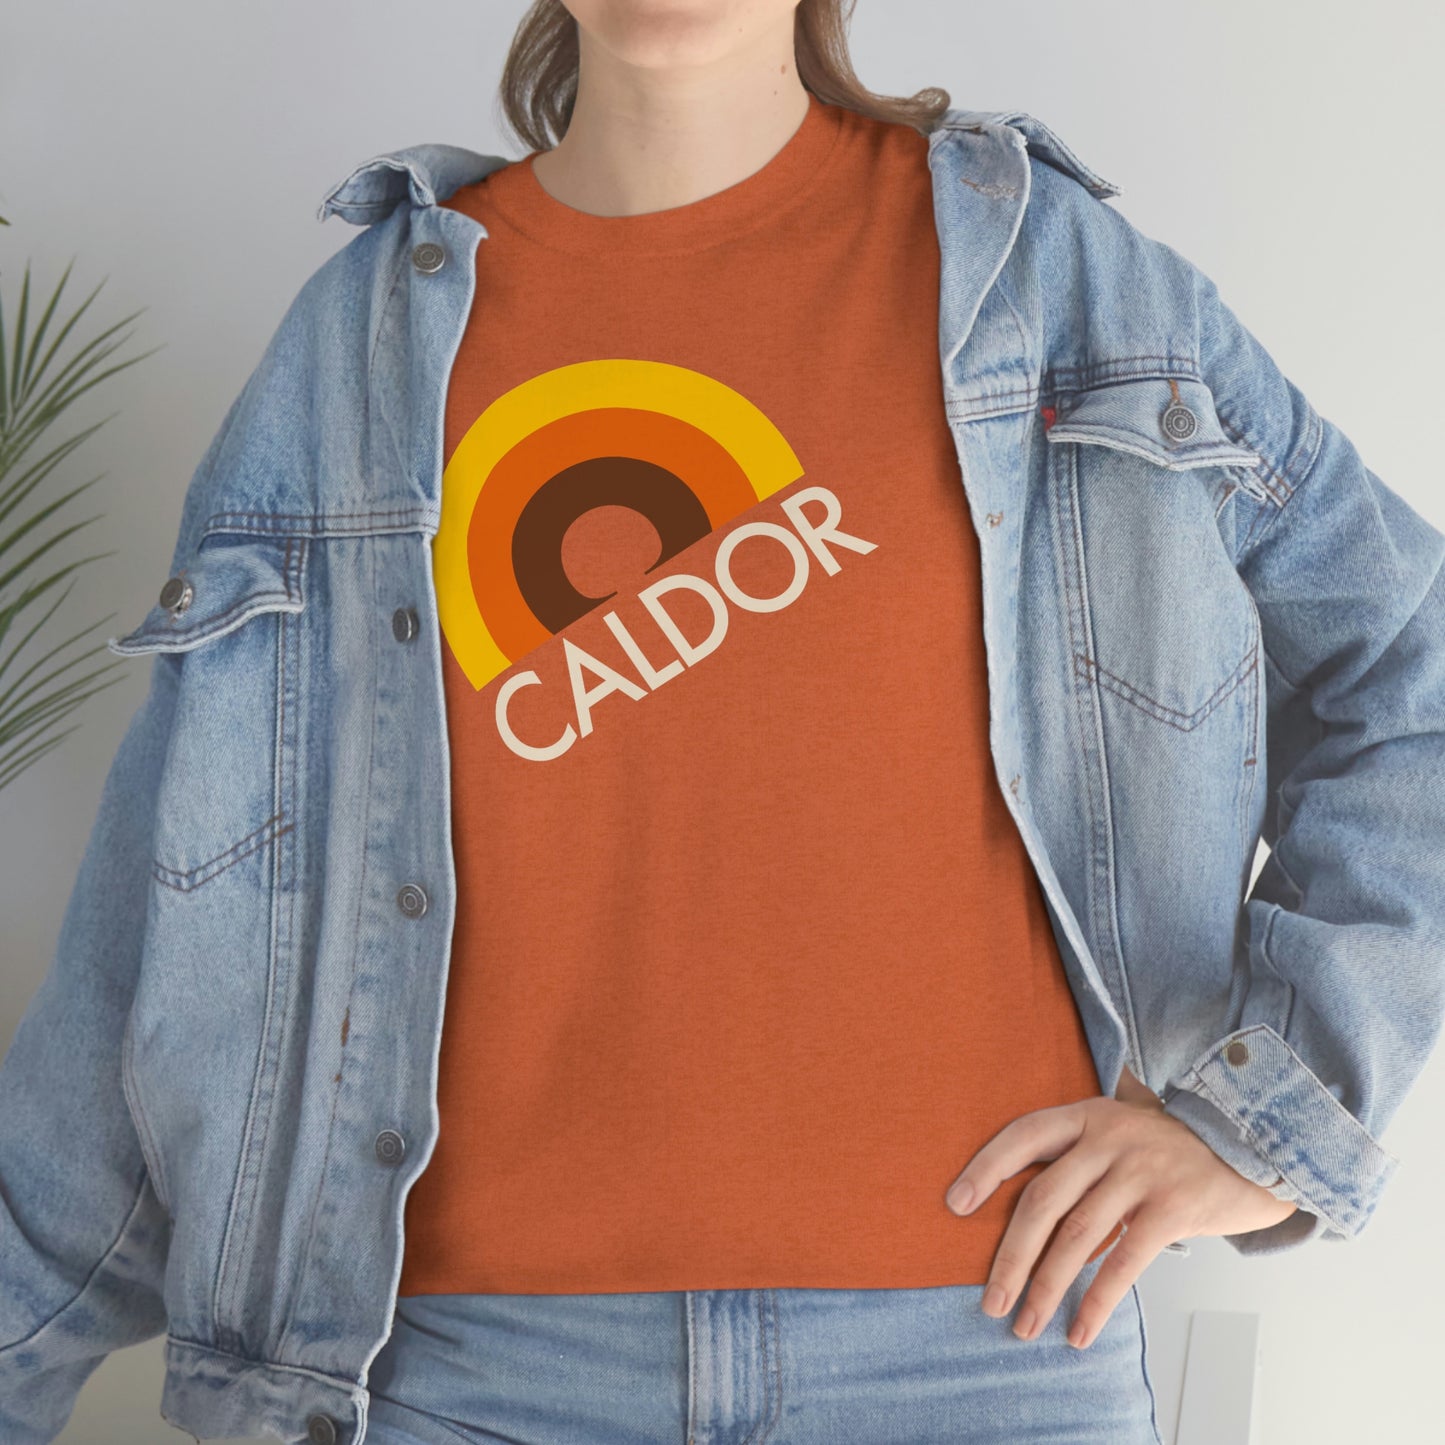 Caldor T-Shirt